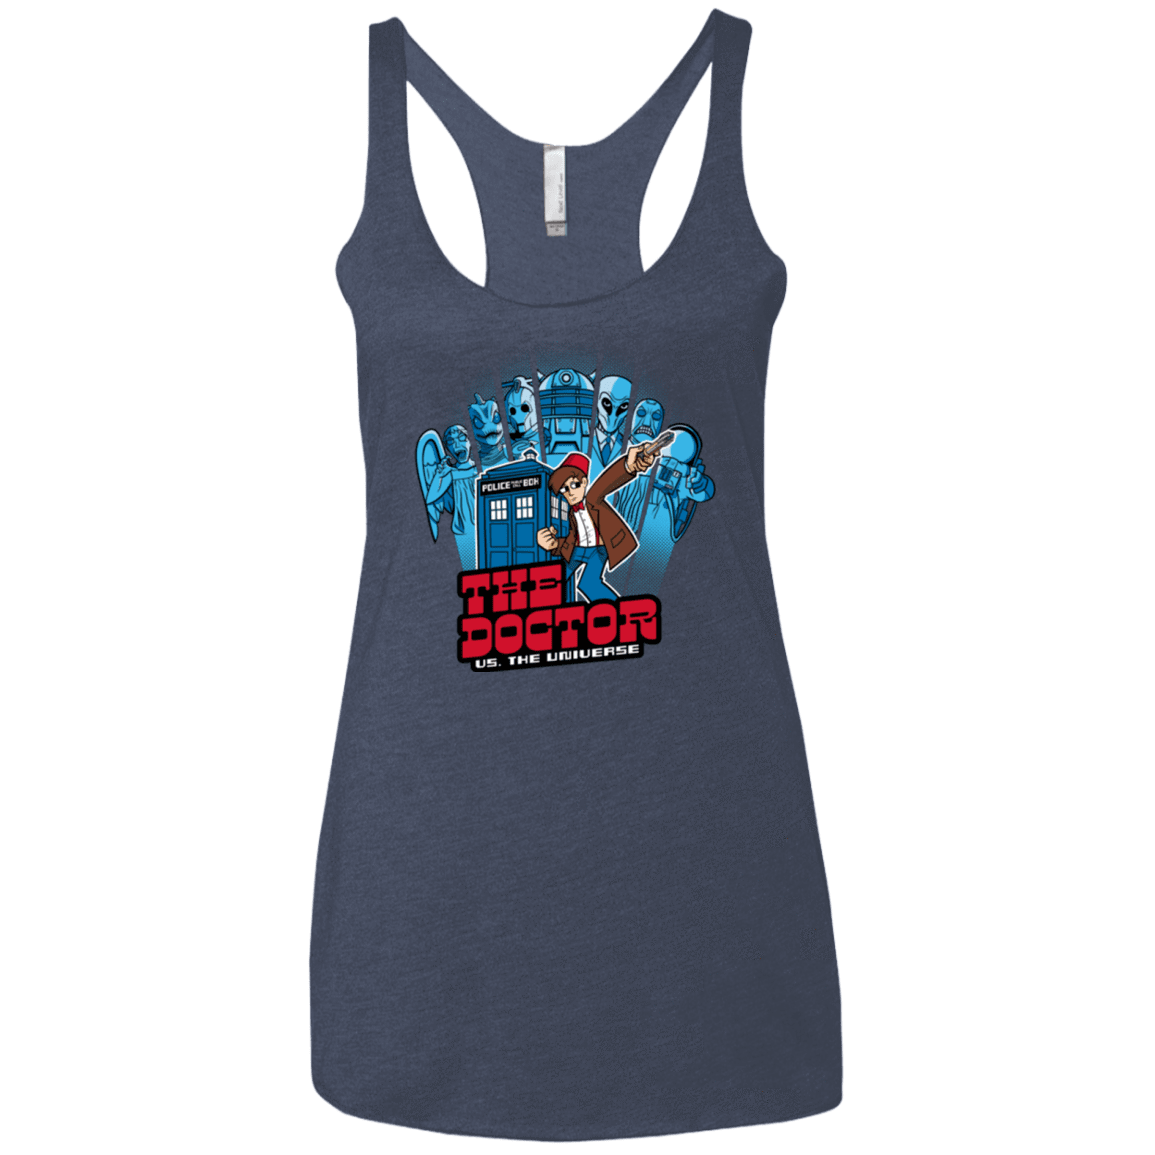 T-Shirts Vintage Navy / X-Small 11 vs universe Women's Triblend Racerback Tank